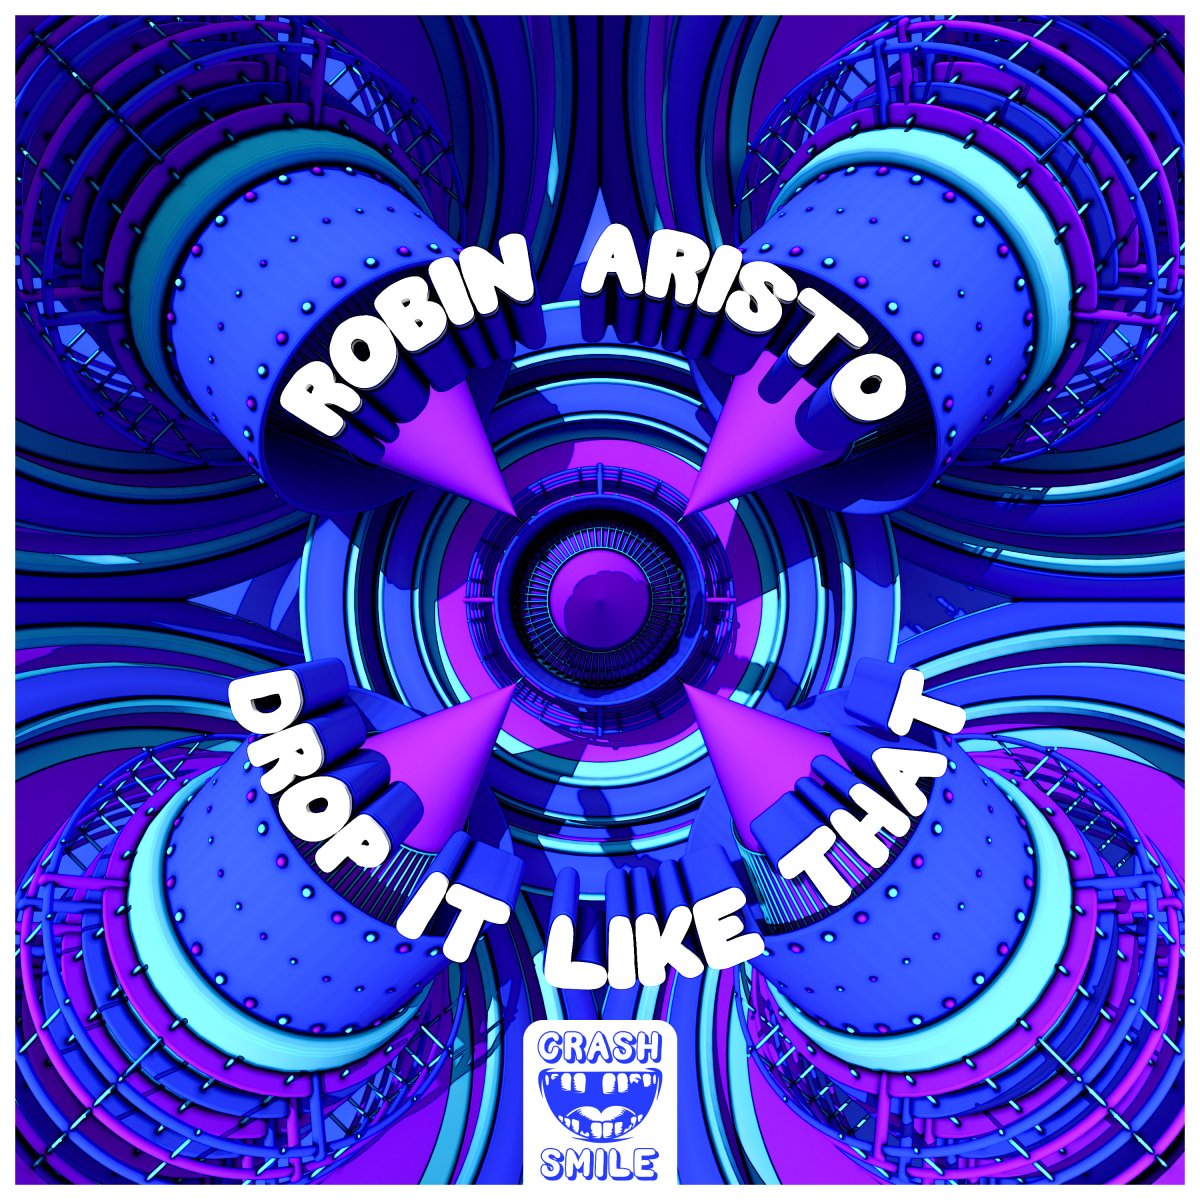 Drop It Like That - Robin Aristo⁠ 